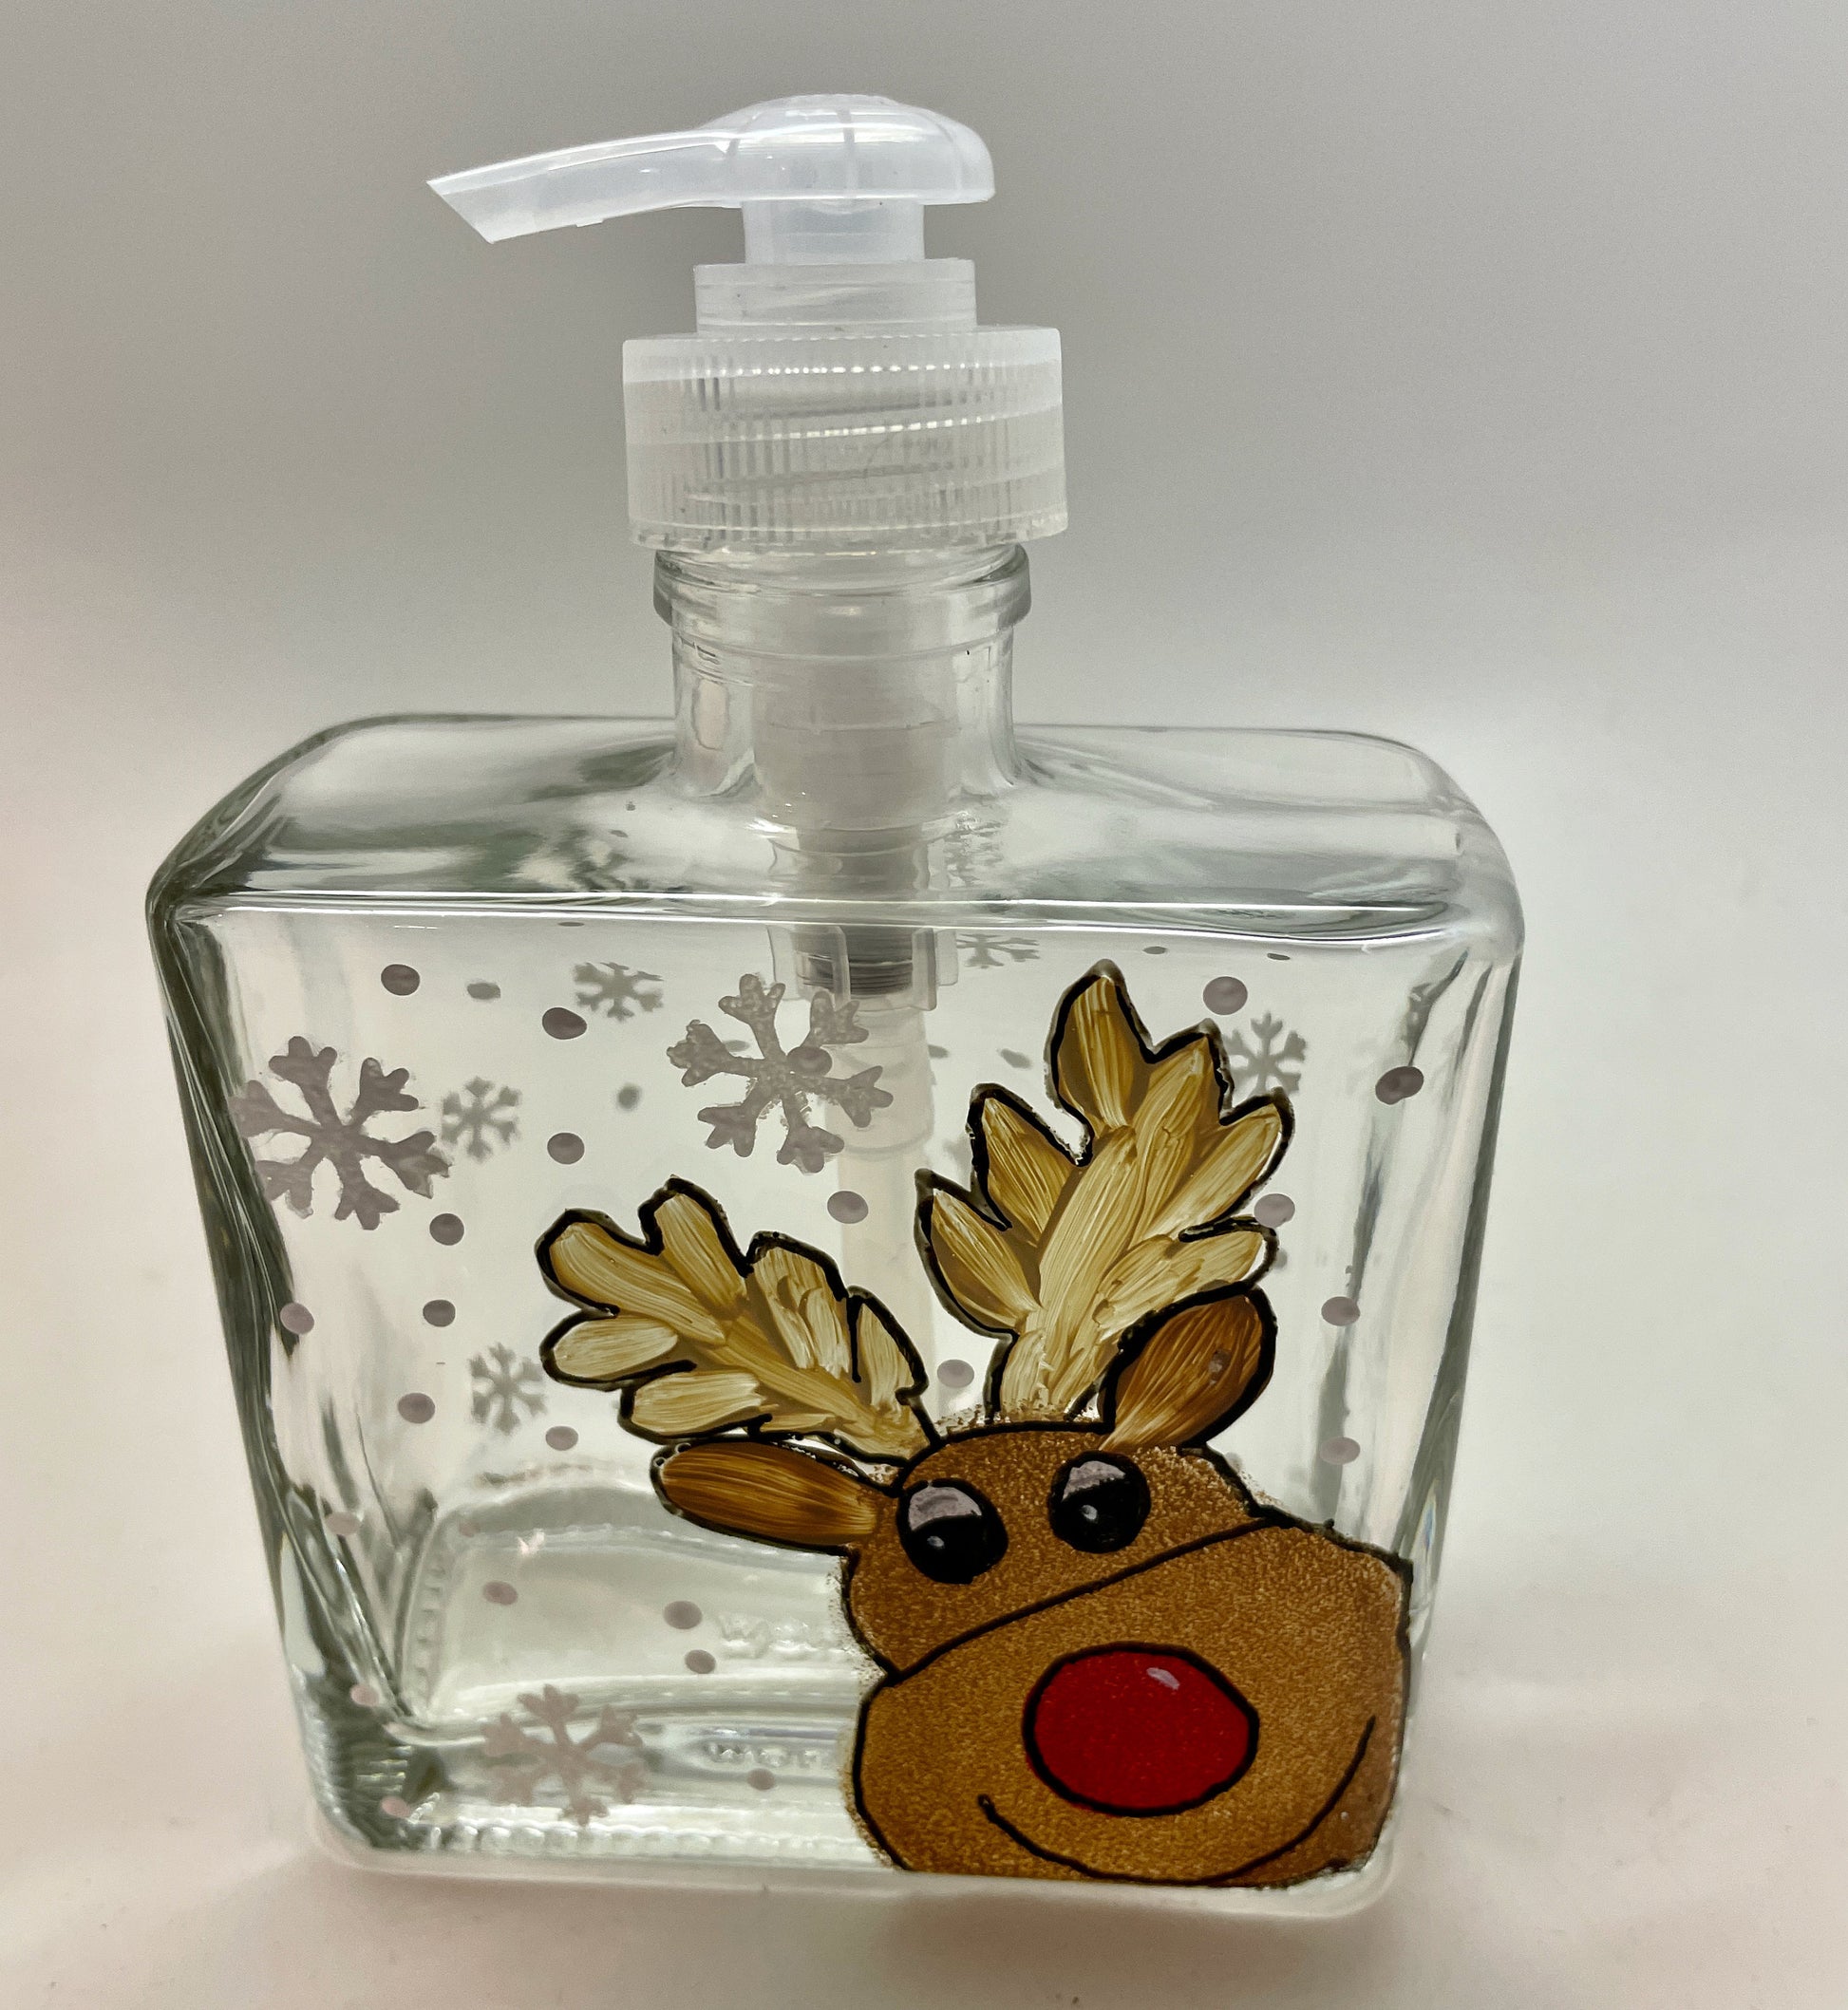 Hand Painted Reindeer Soap Dispenser